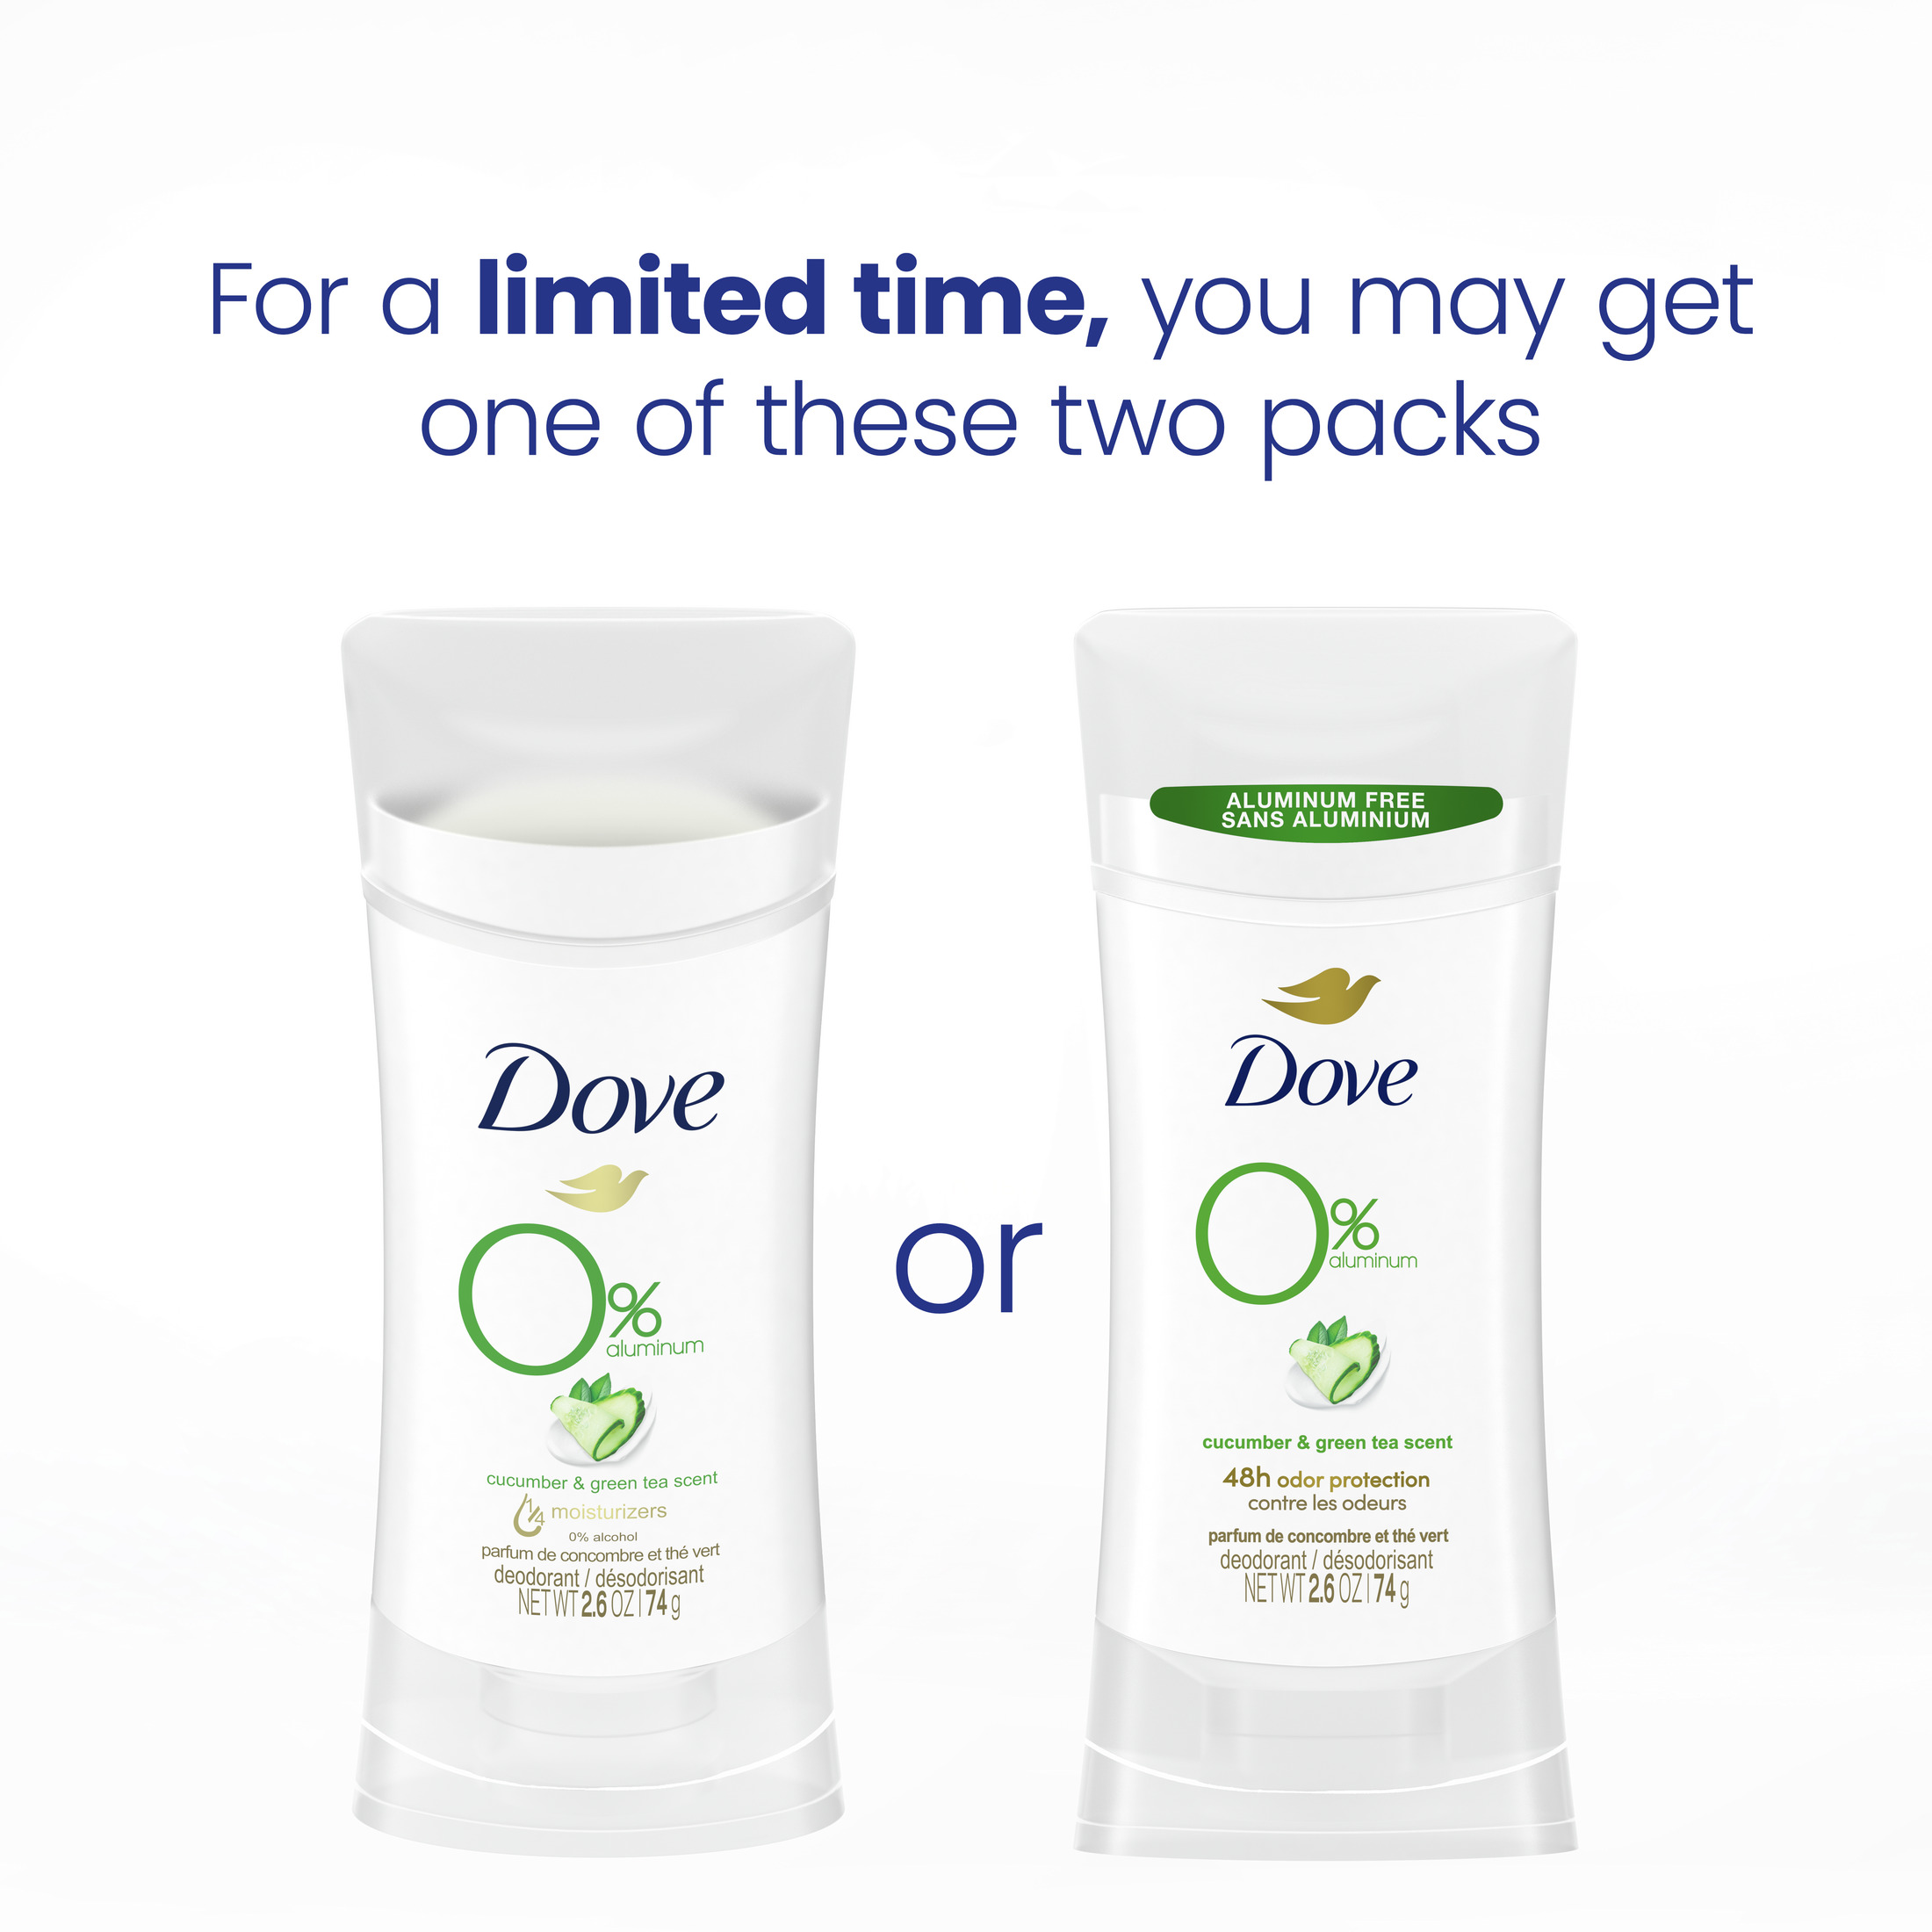 Dove 0% Aluminum Women's Deodorant Stick, Cucumber and Green Tea, 2.6 oz - image 3 of 10